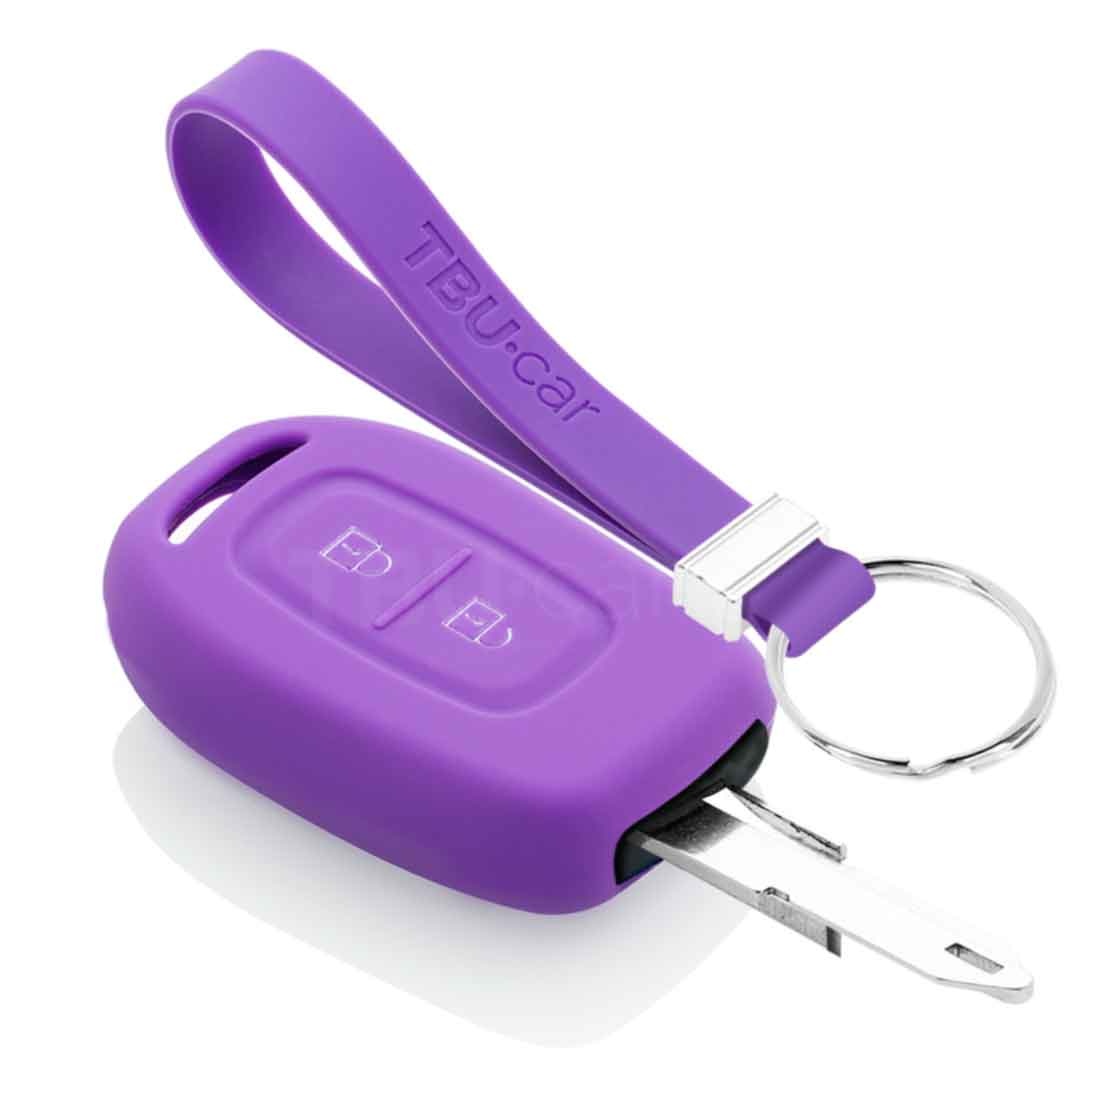 TBU car TBU car Autoschlüssel Hülle kompatibel mit Dacia 2 Tasten - Schutzhülle aus Silikon - Auto Schlüsselhülle Cover in Violett